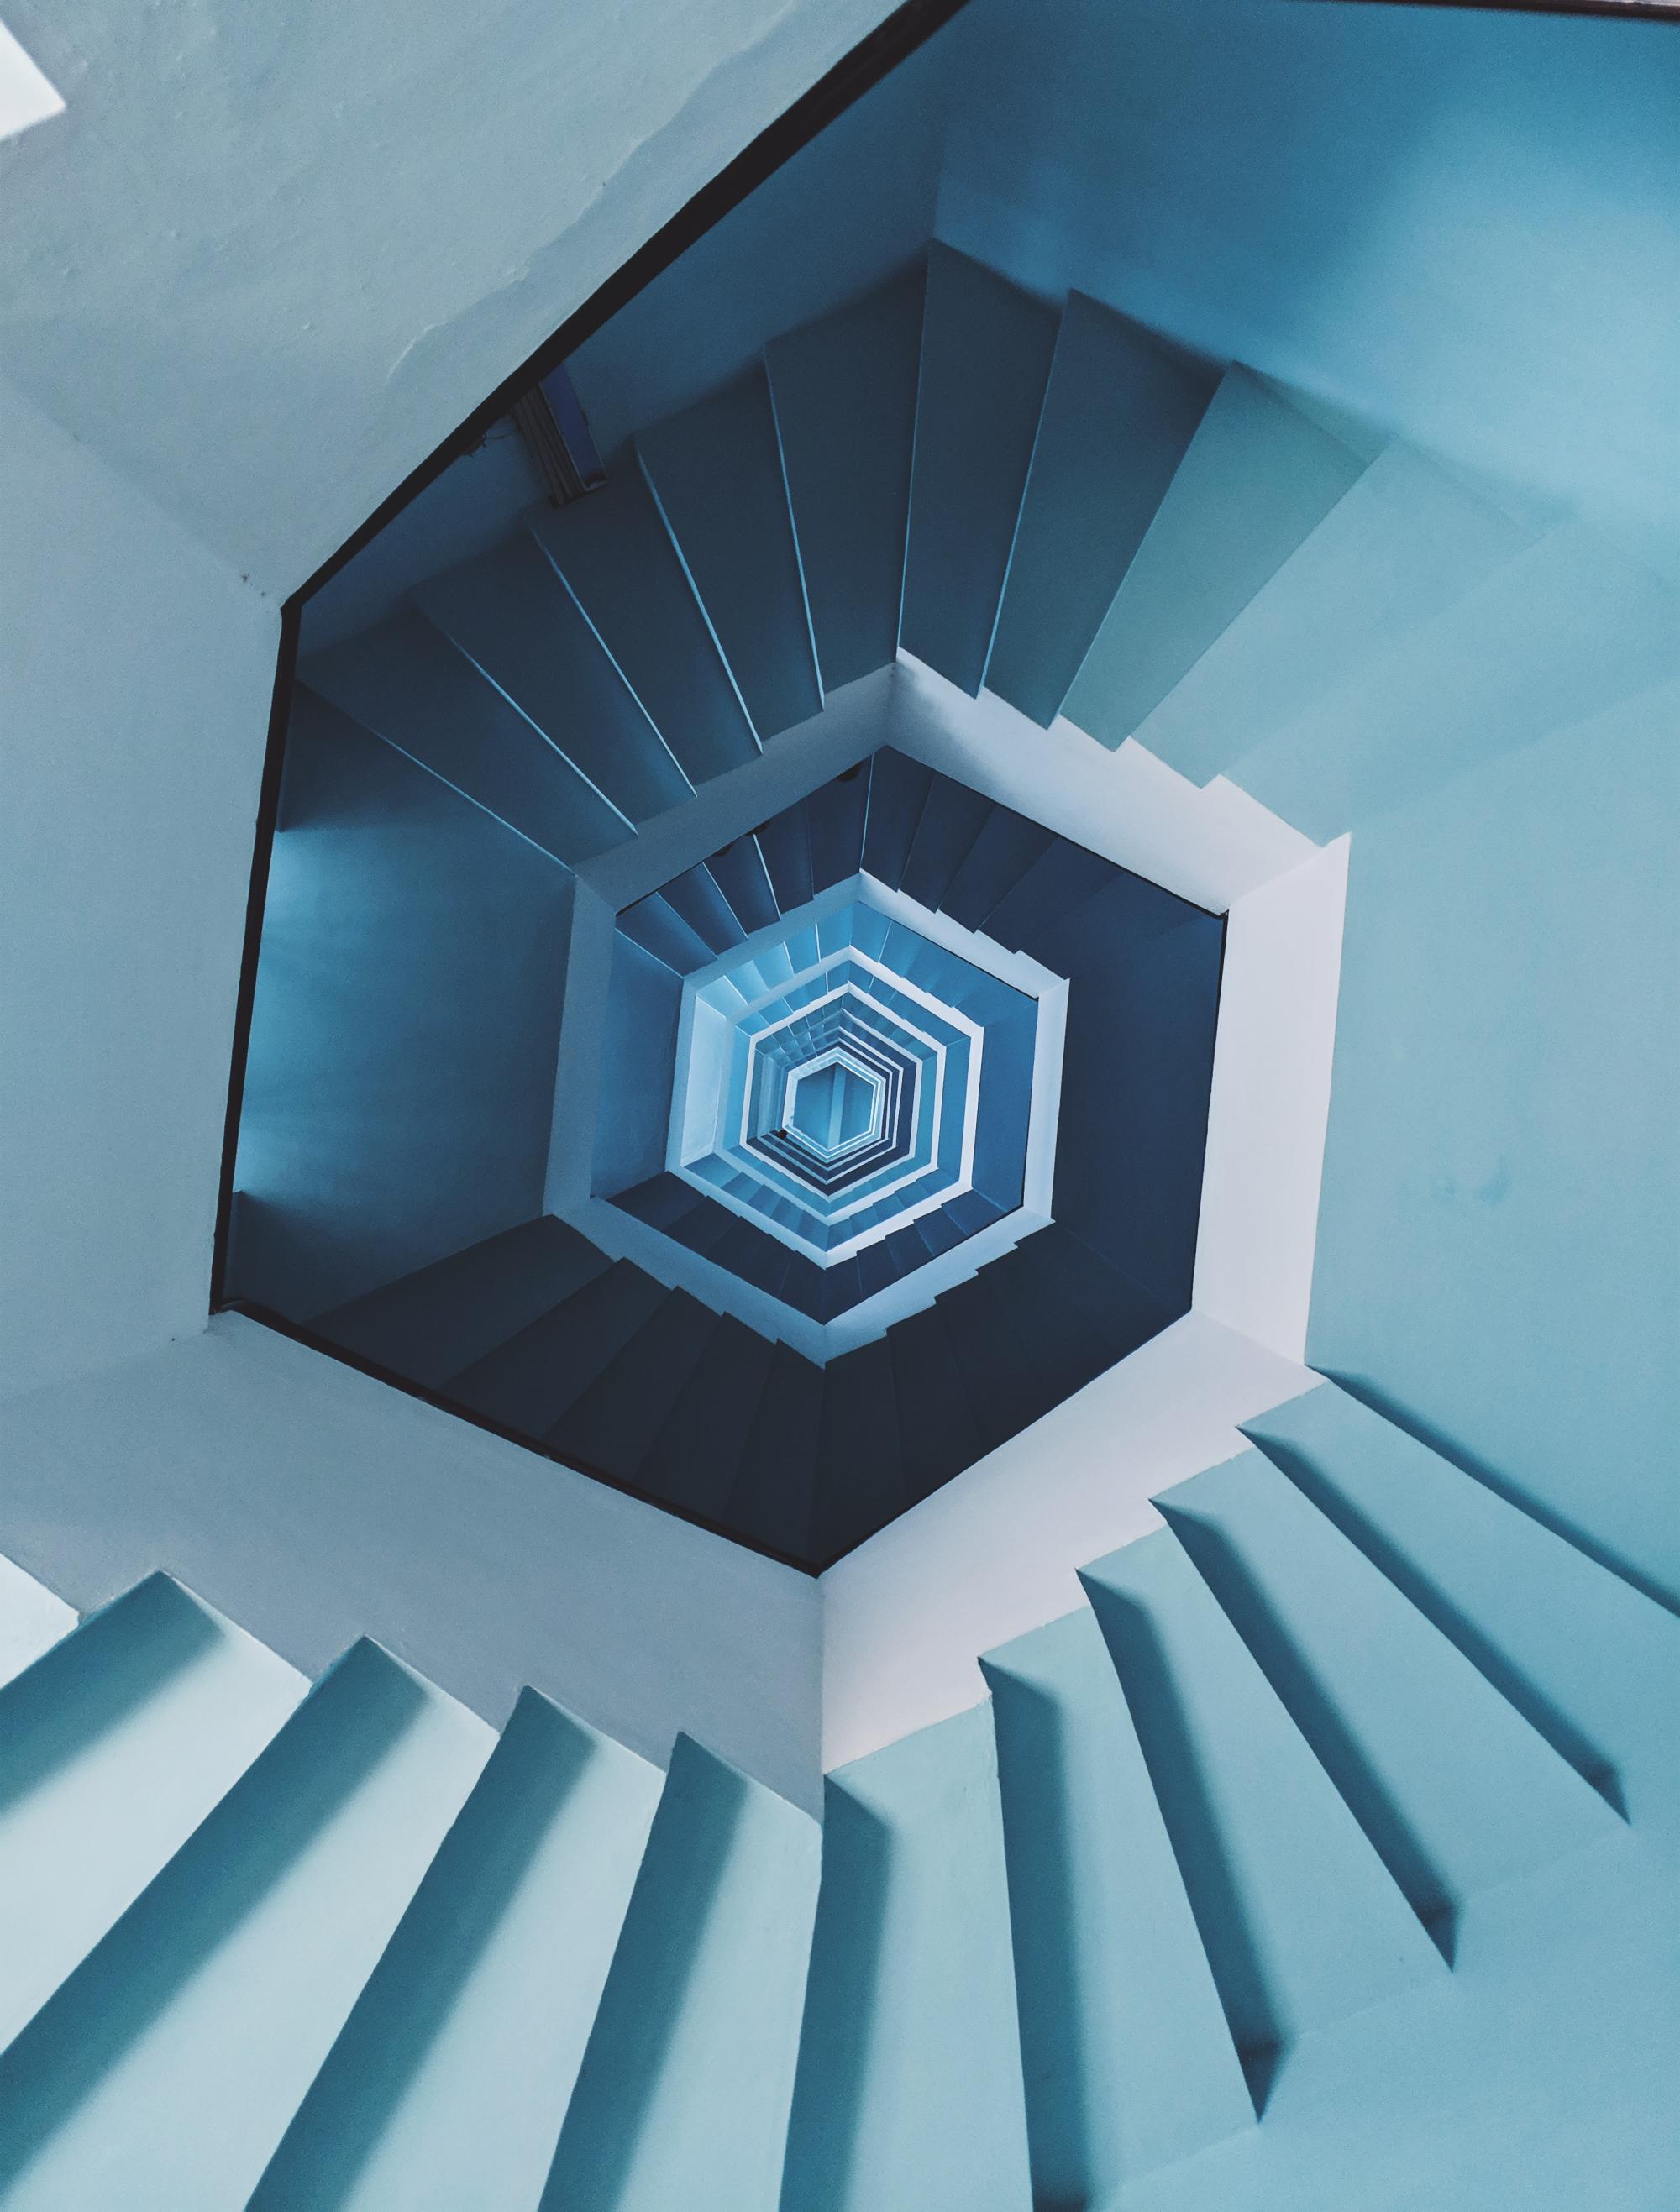 Circular stairwell